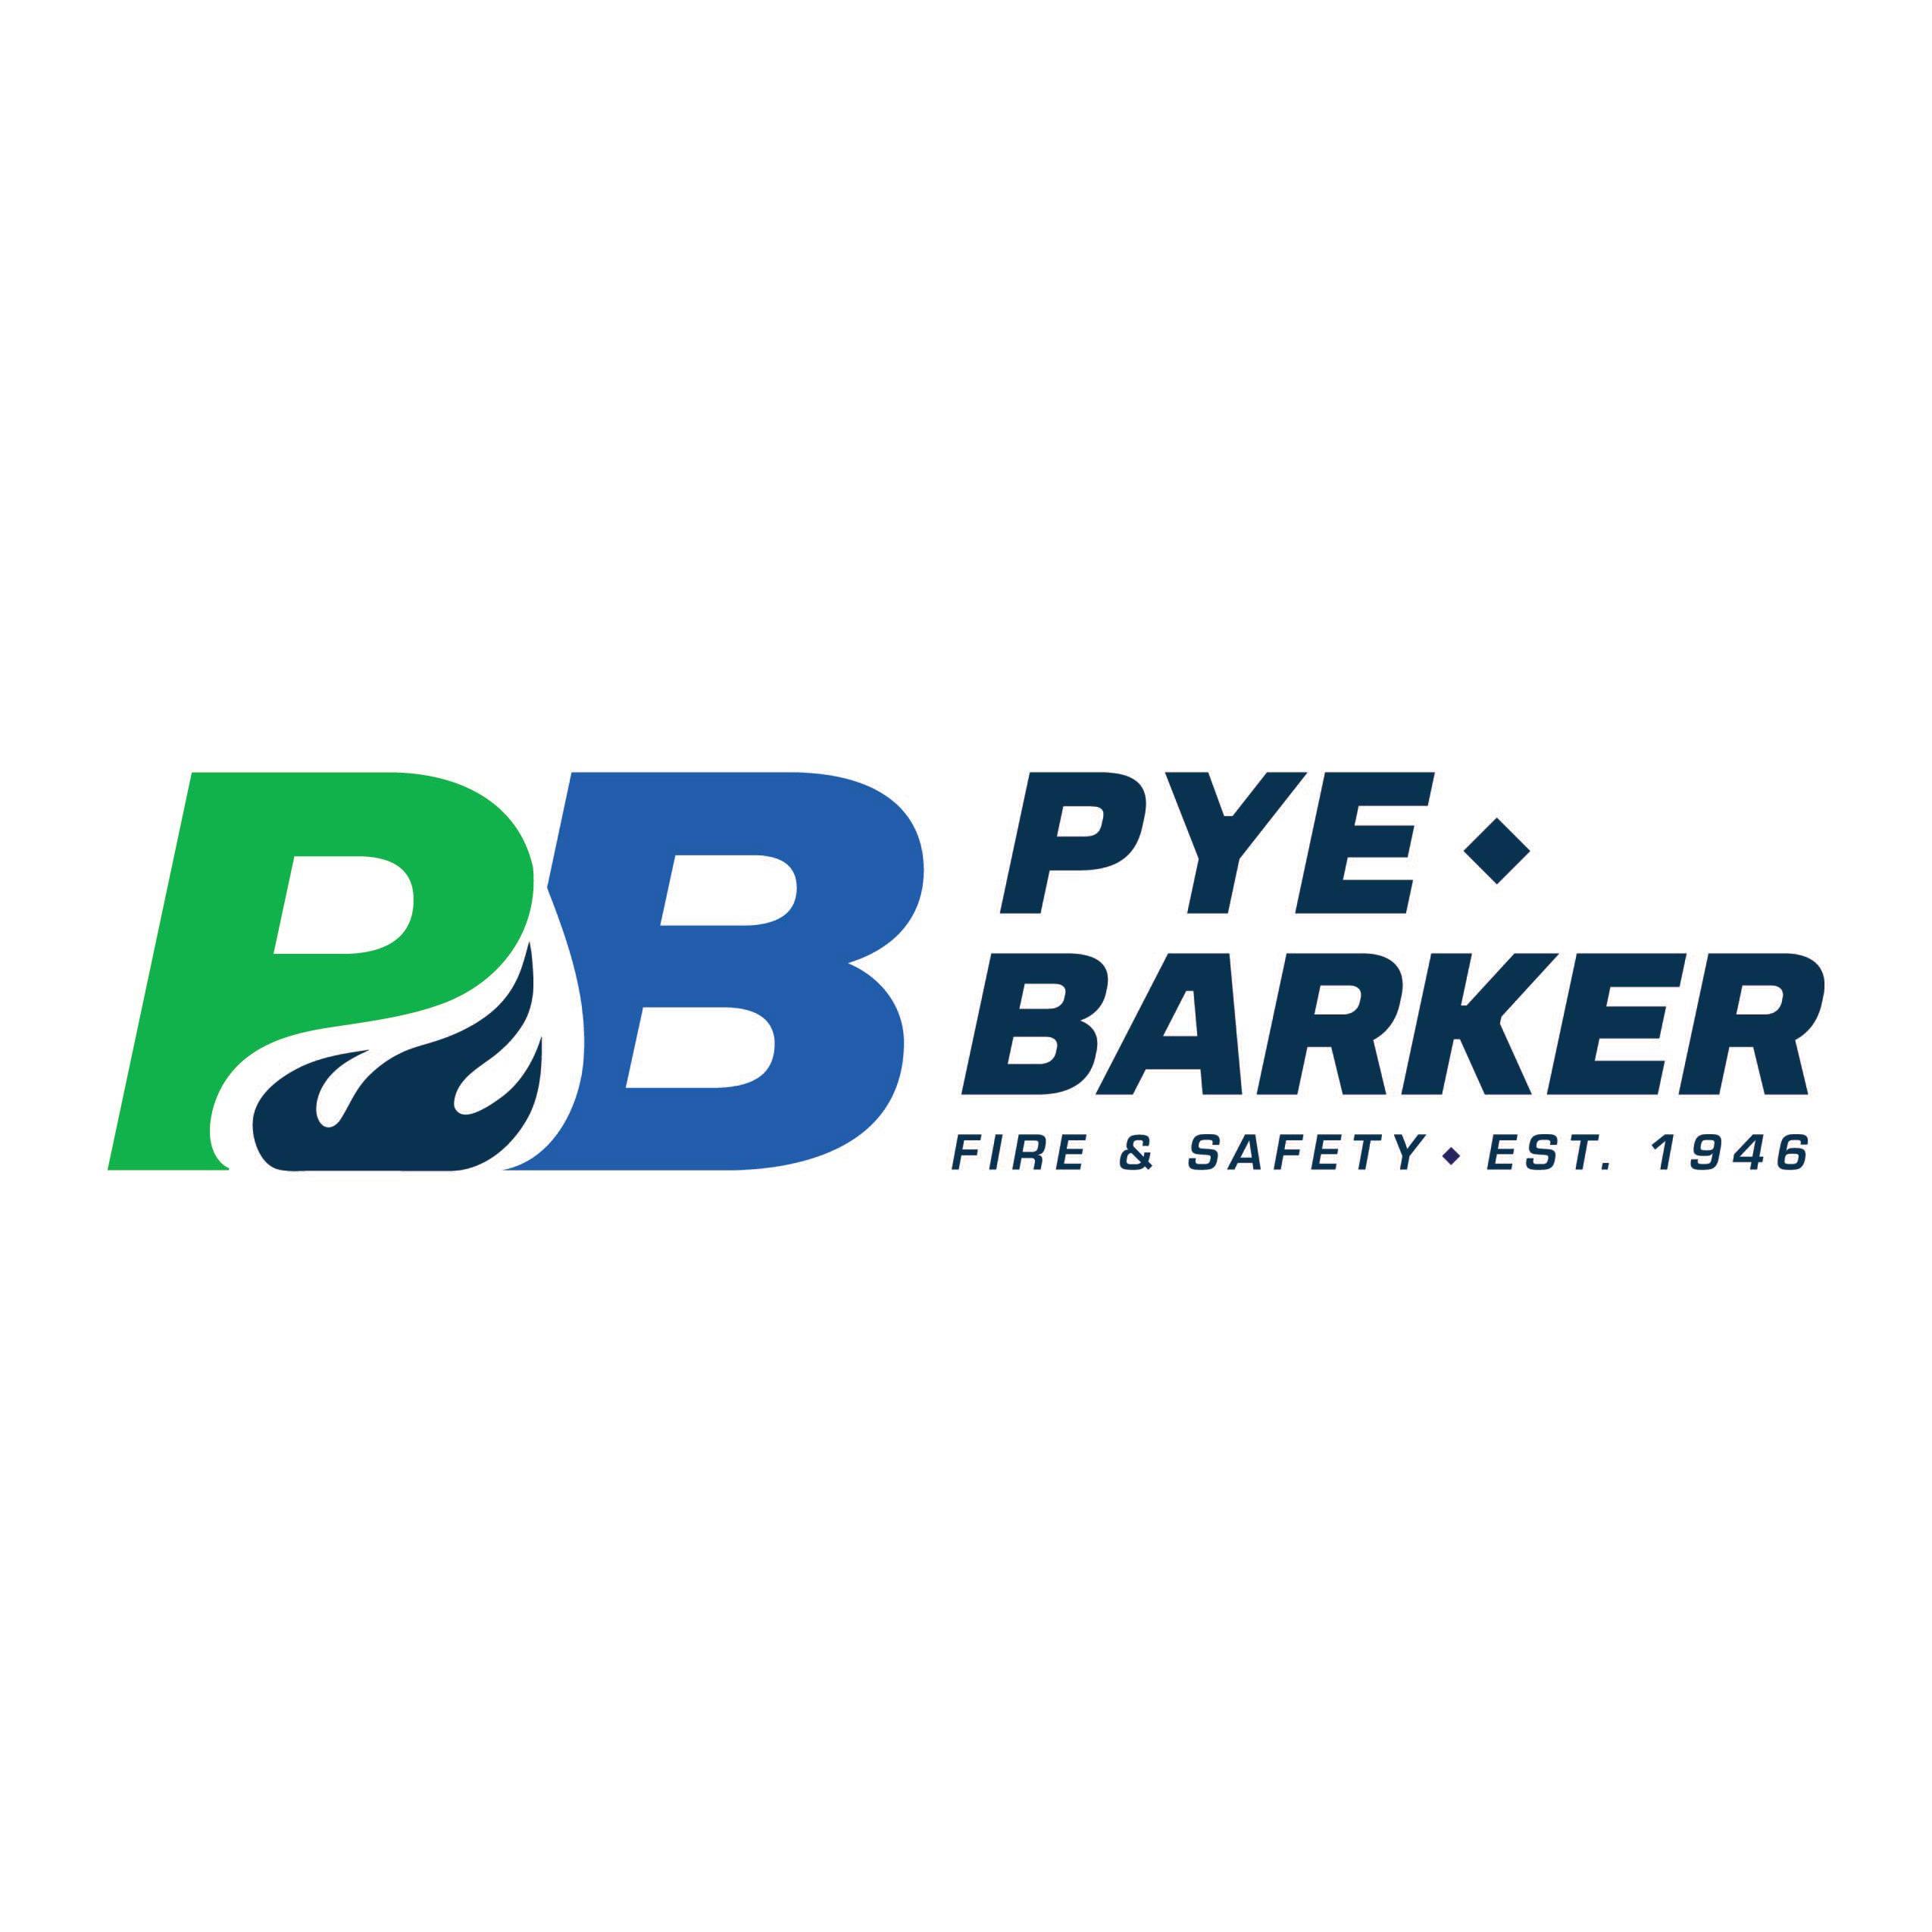 Pye-Barker Fire & Safety - Greensboro, NC 27409 - (336)856-8701 | ShowMeLocal.com